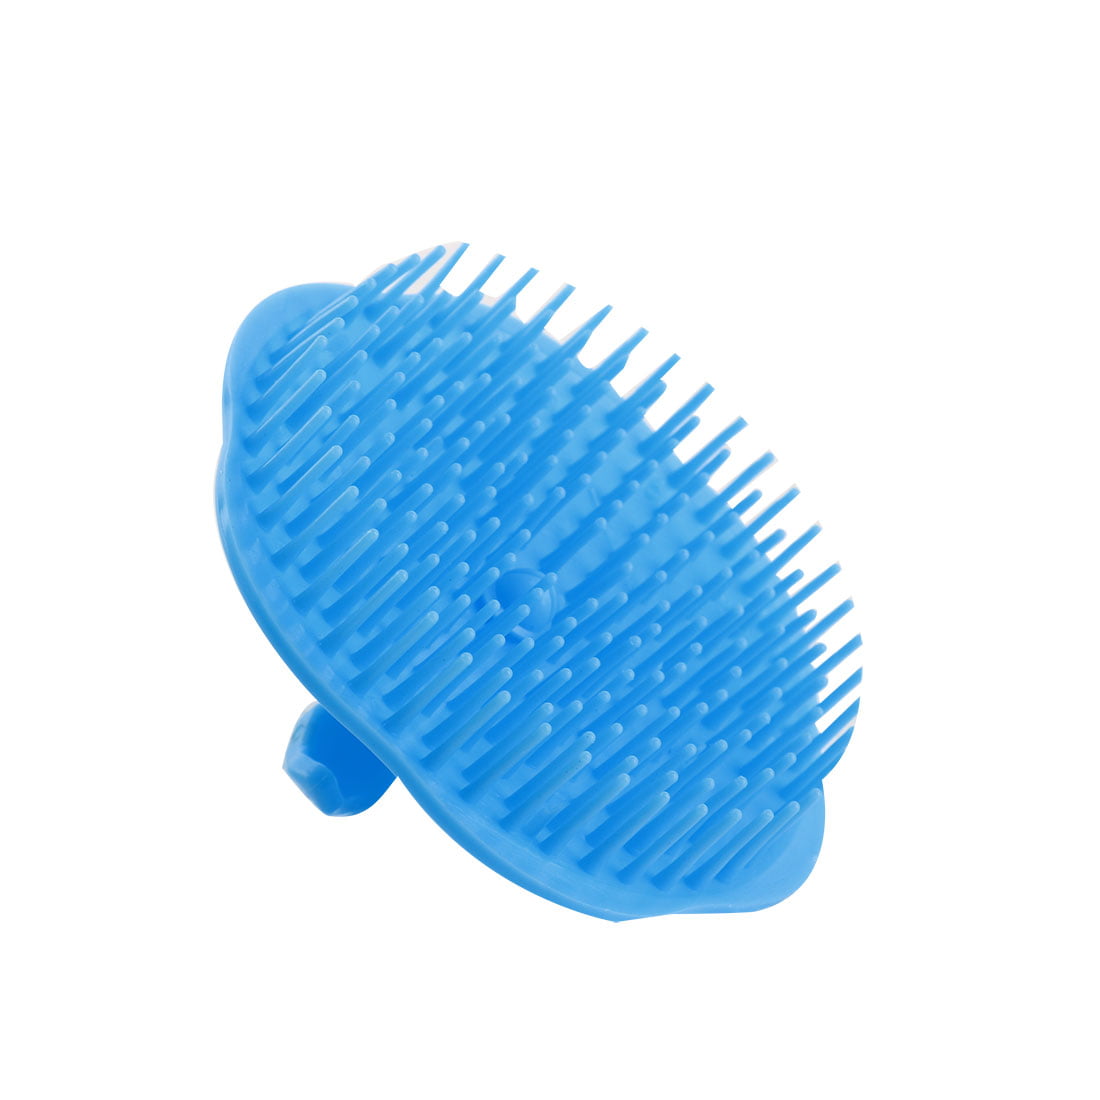 scalp shampoo brush